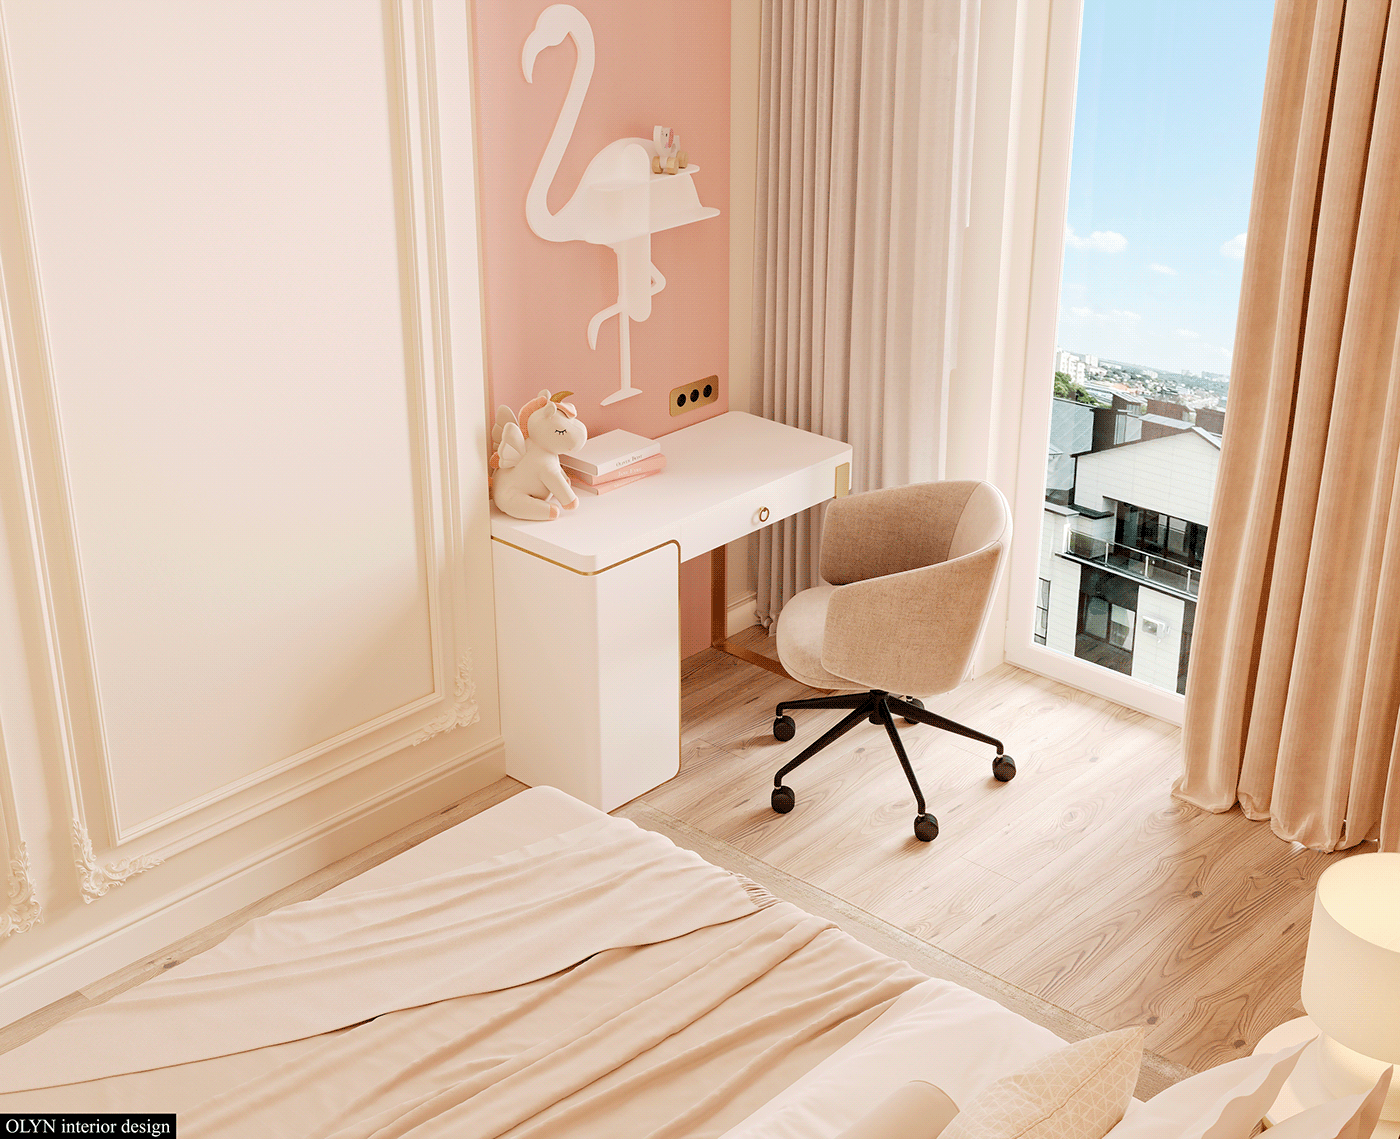 Character design  kidsroom childroom interior design  flamingo pink fantasy modern corona 3ds max